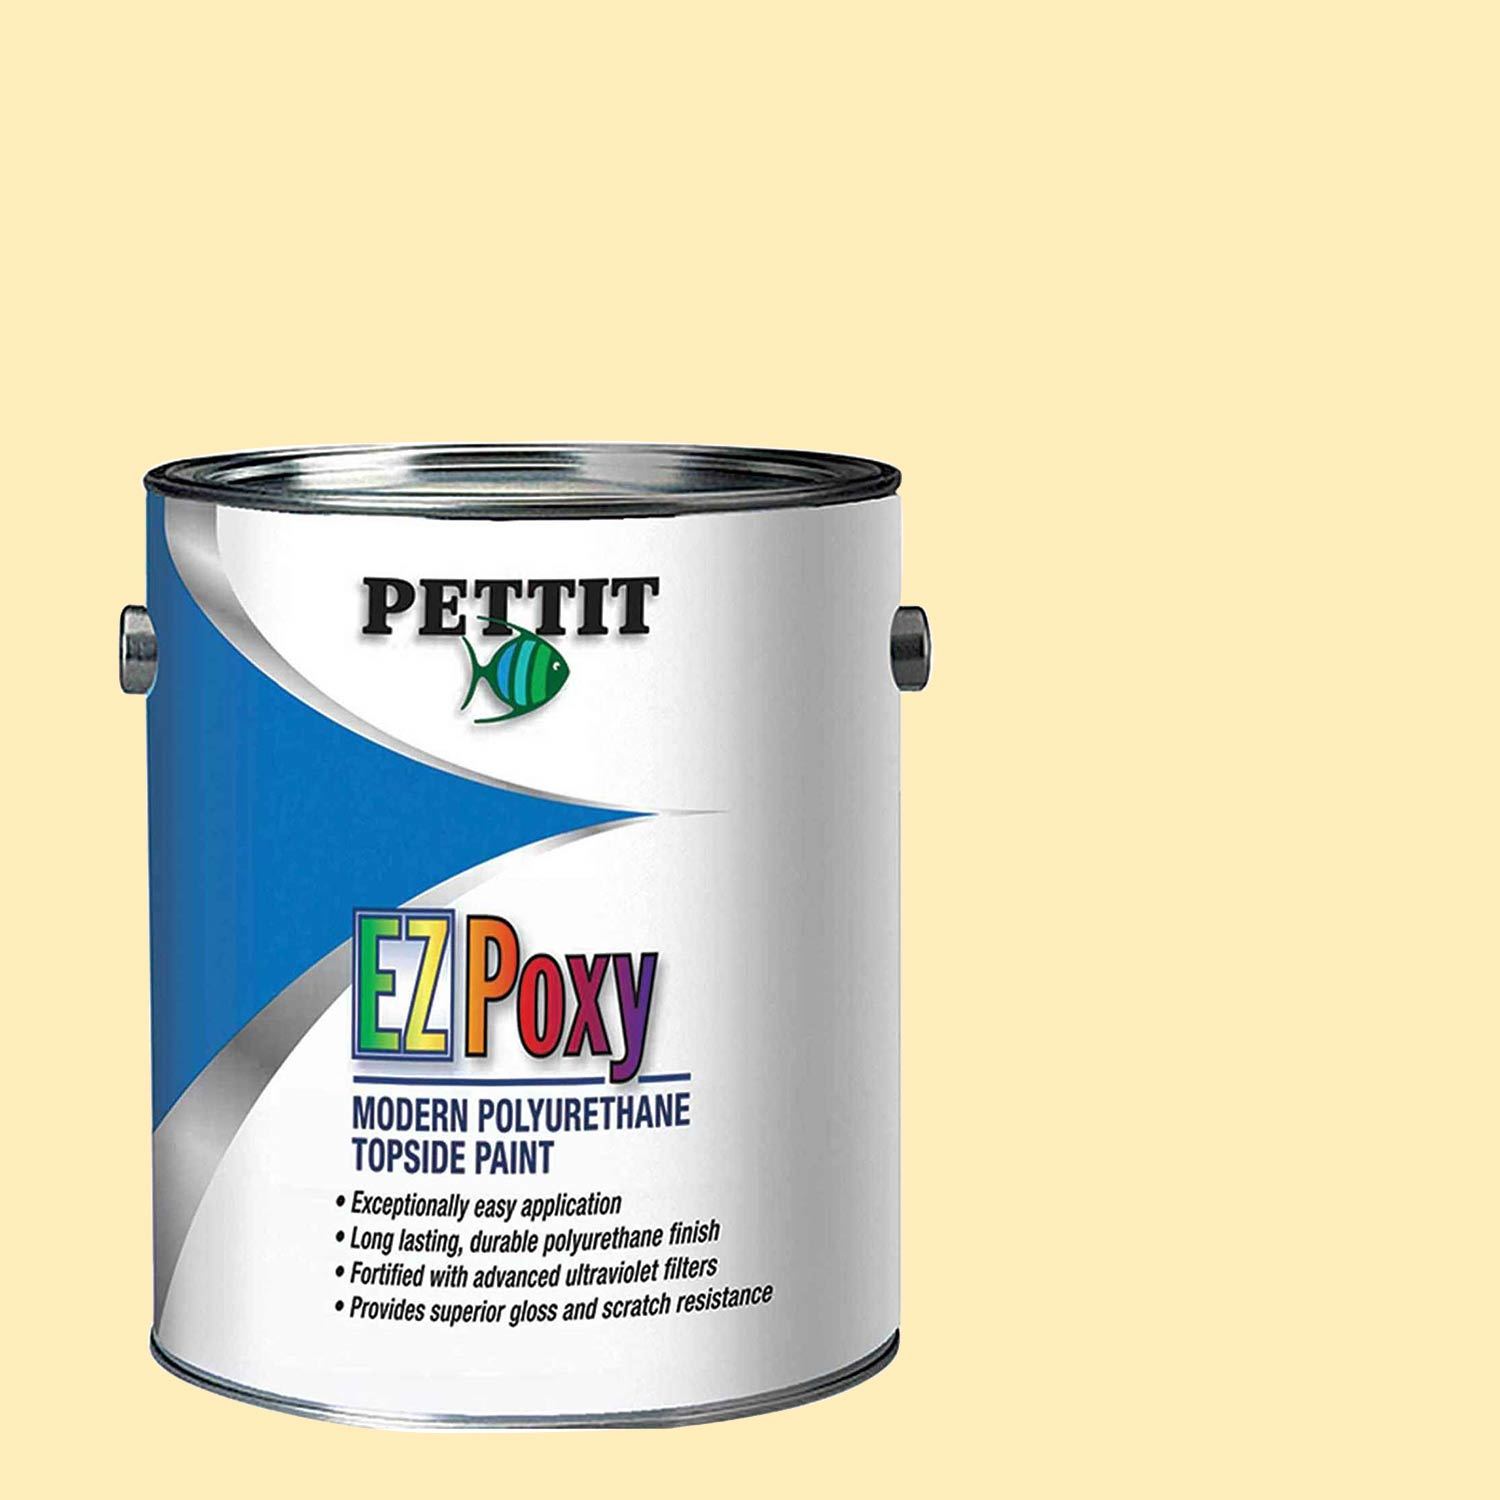 PETTIT PAINT EZ-Poxy Modern Polyurethane Topside Paint 